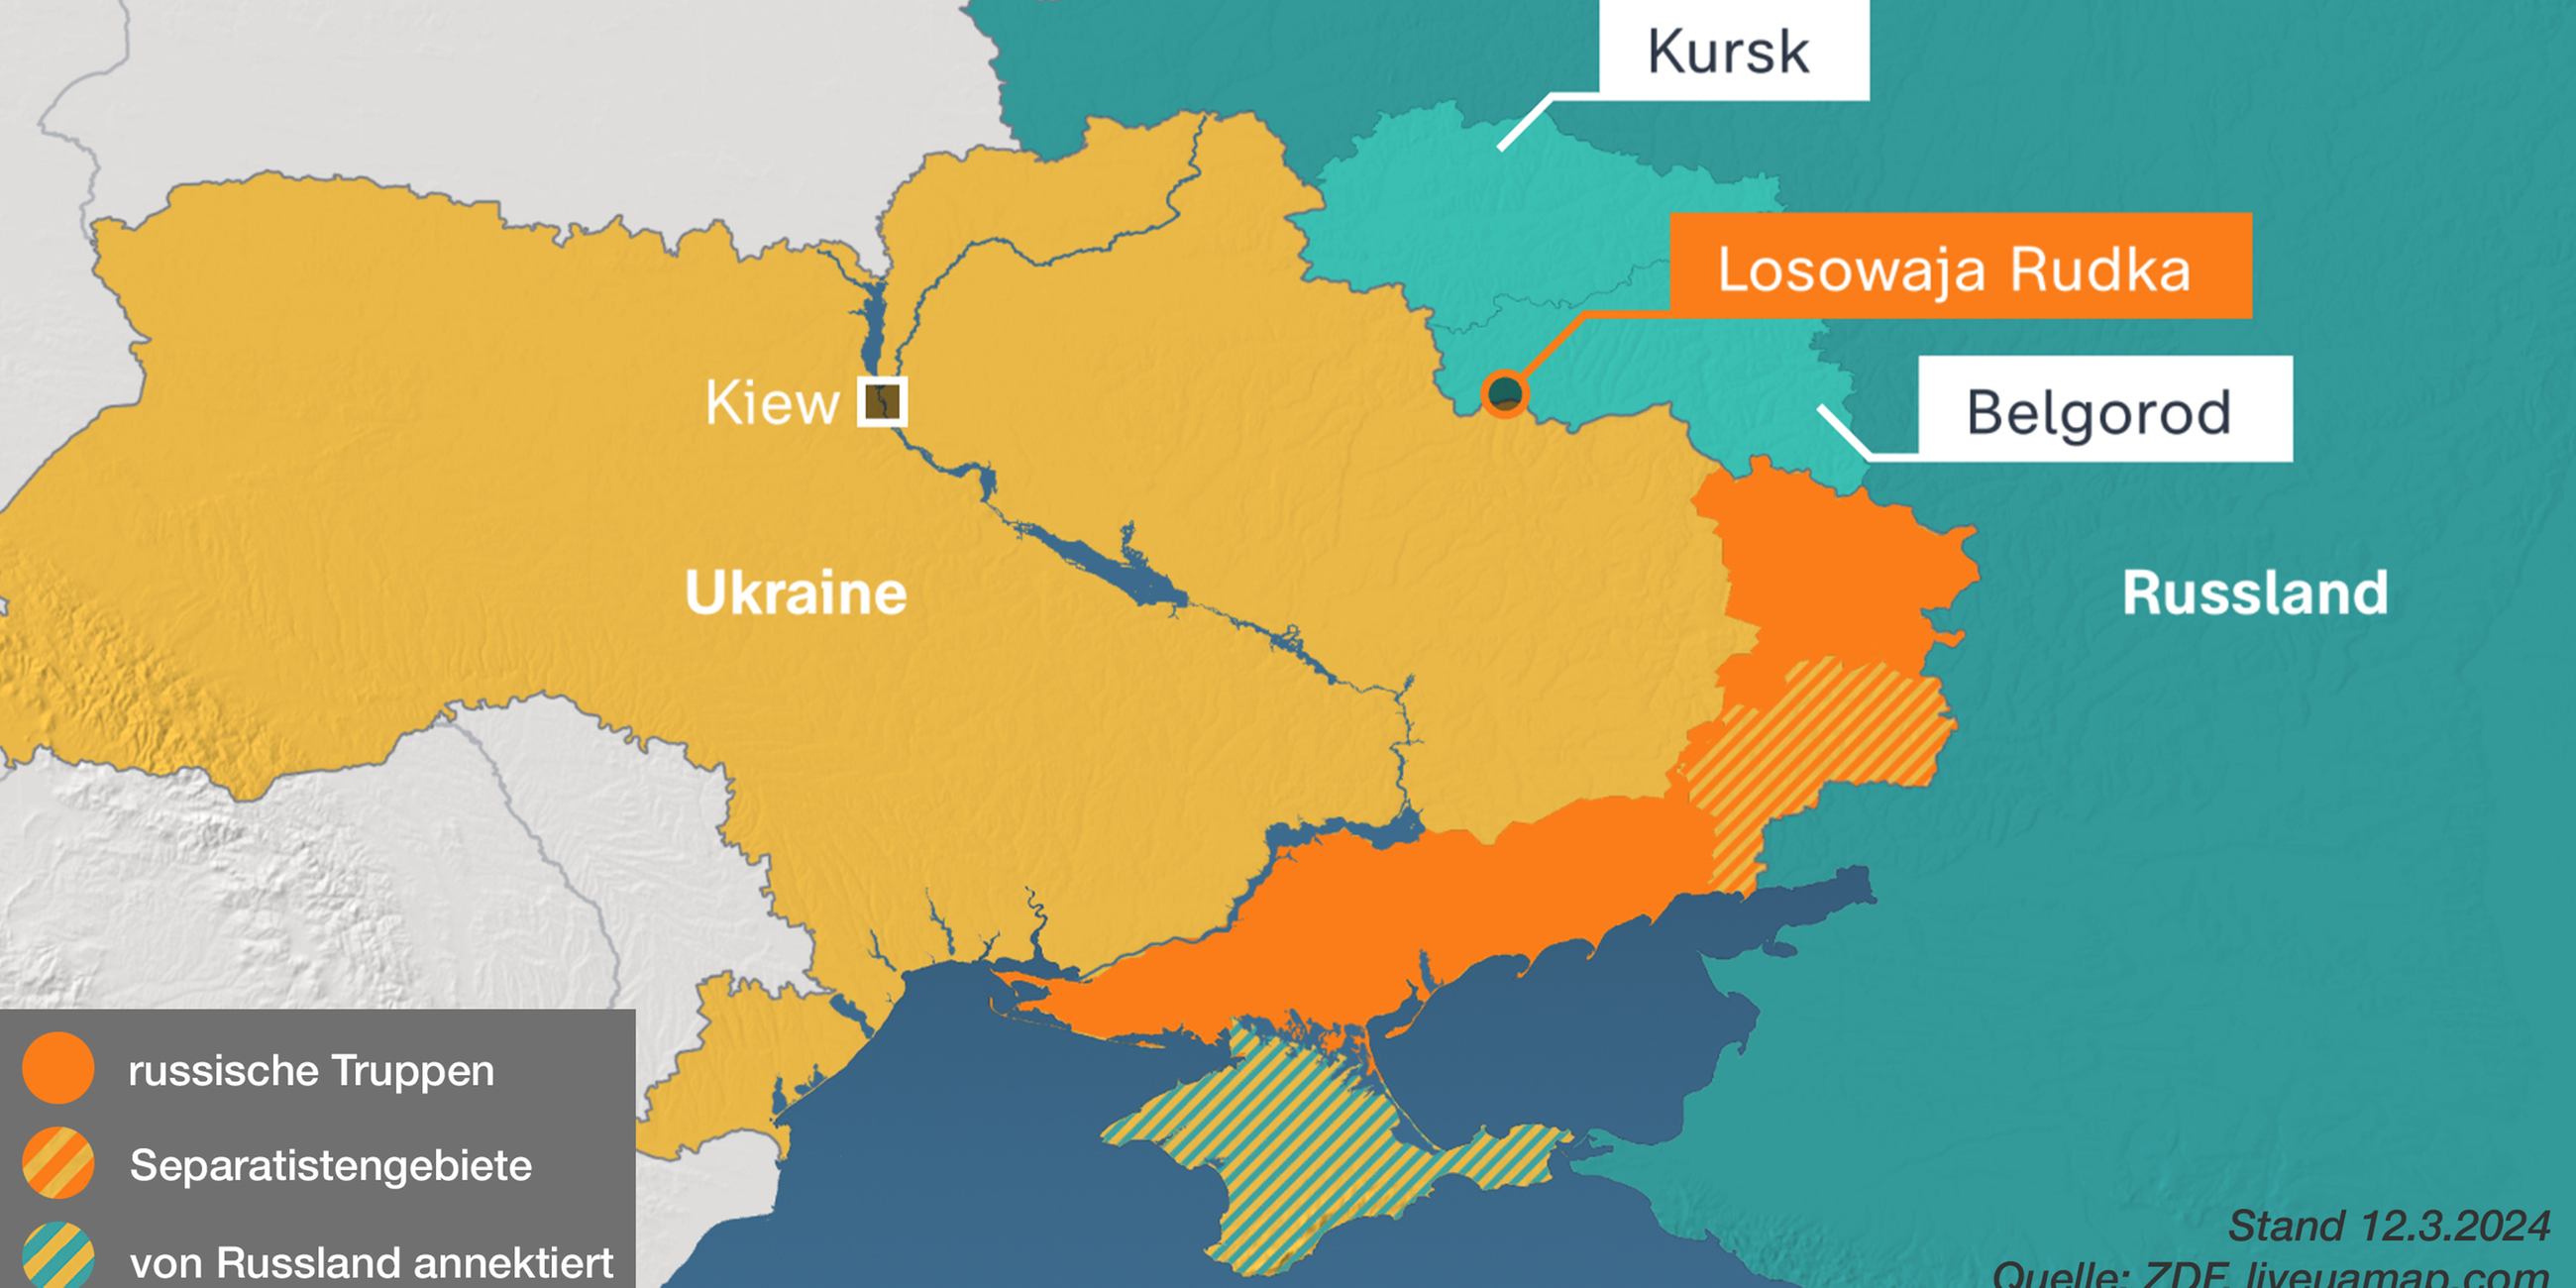 Karte, Ukraine, Russland, Belgorod, Kursk